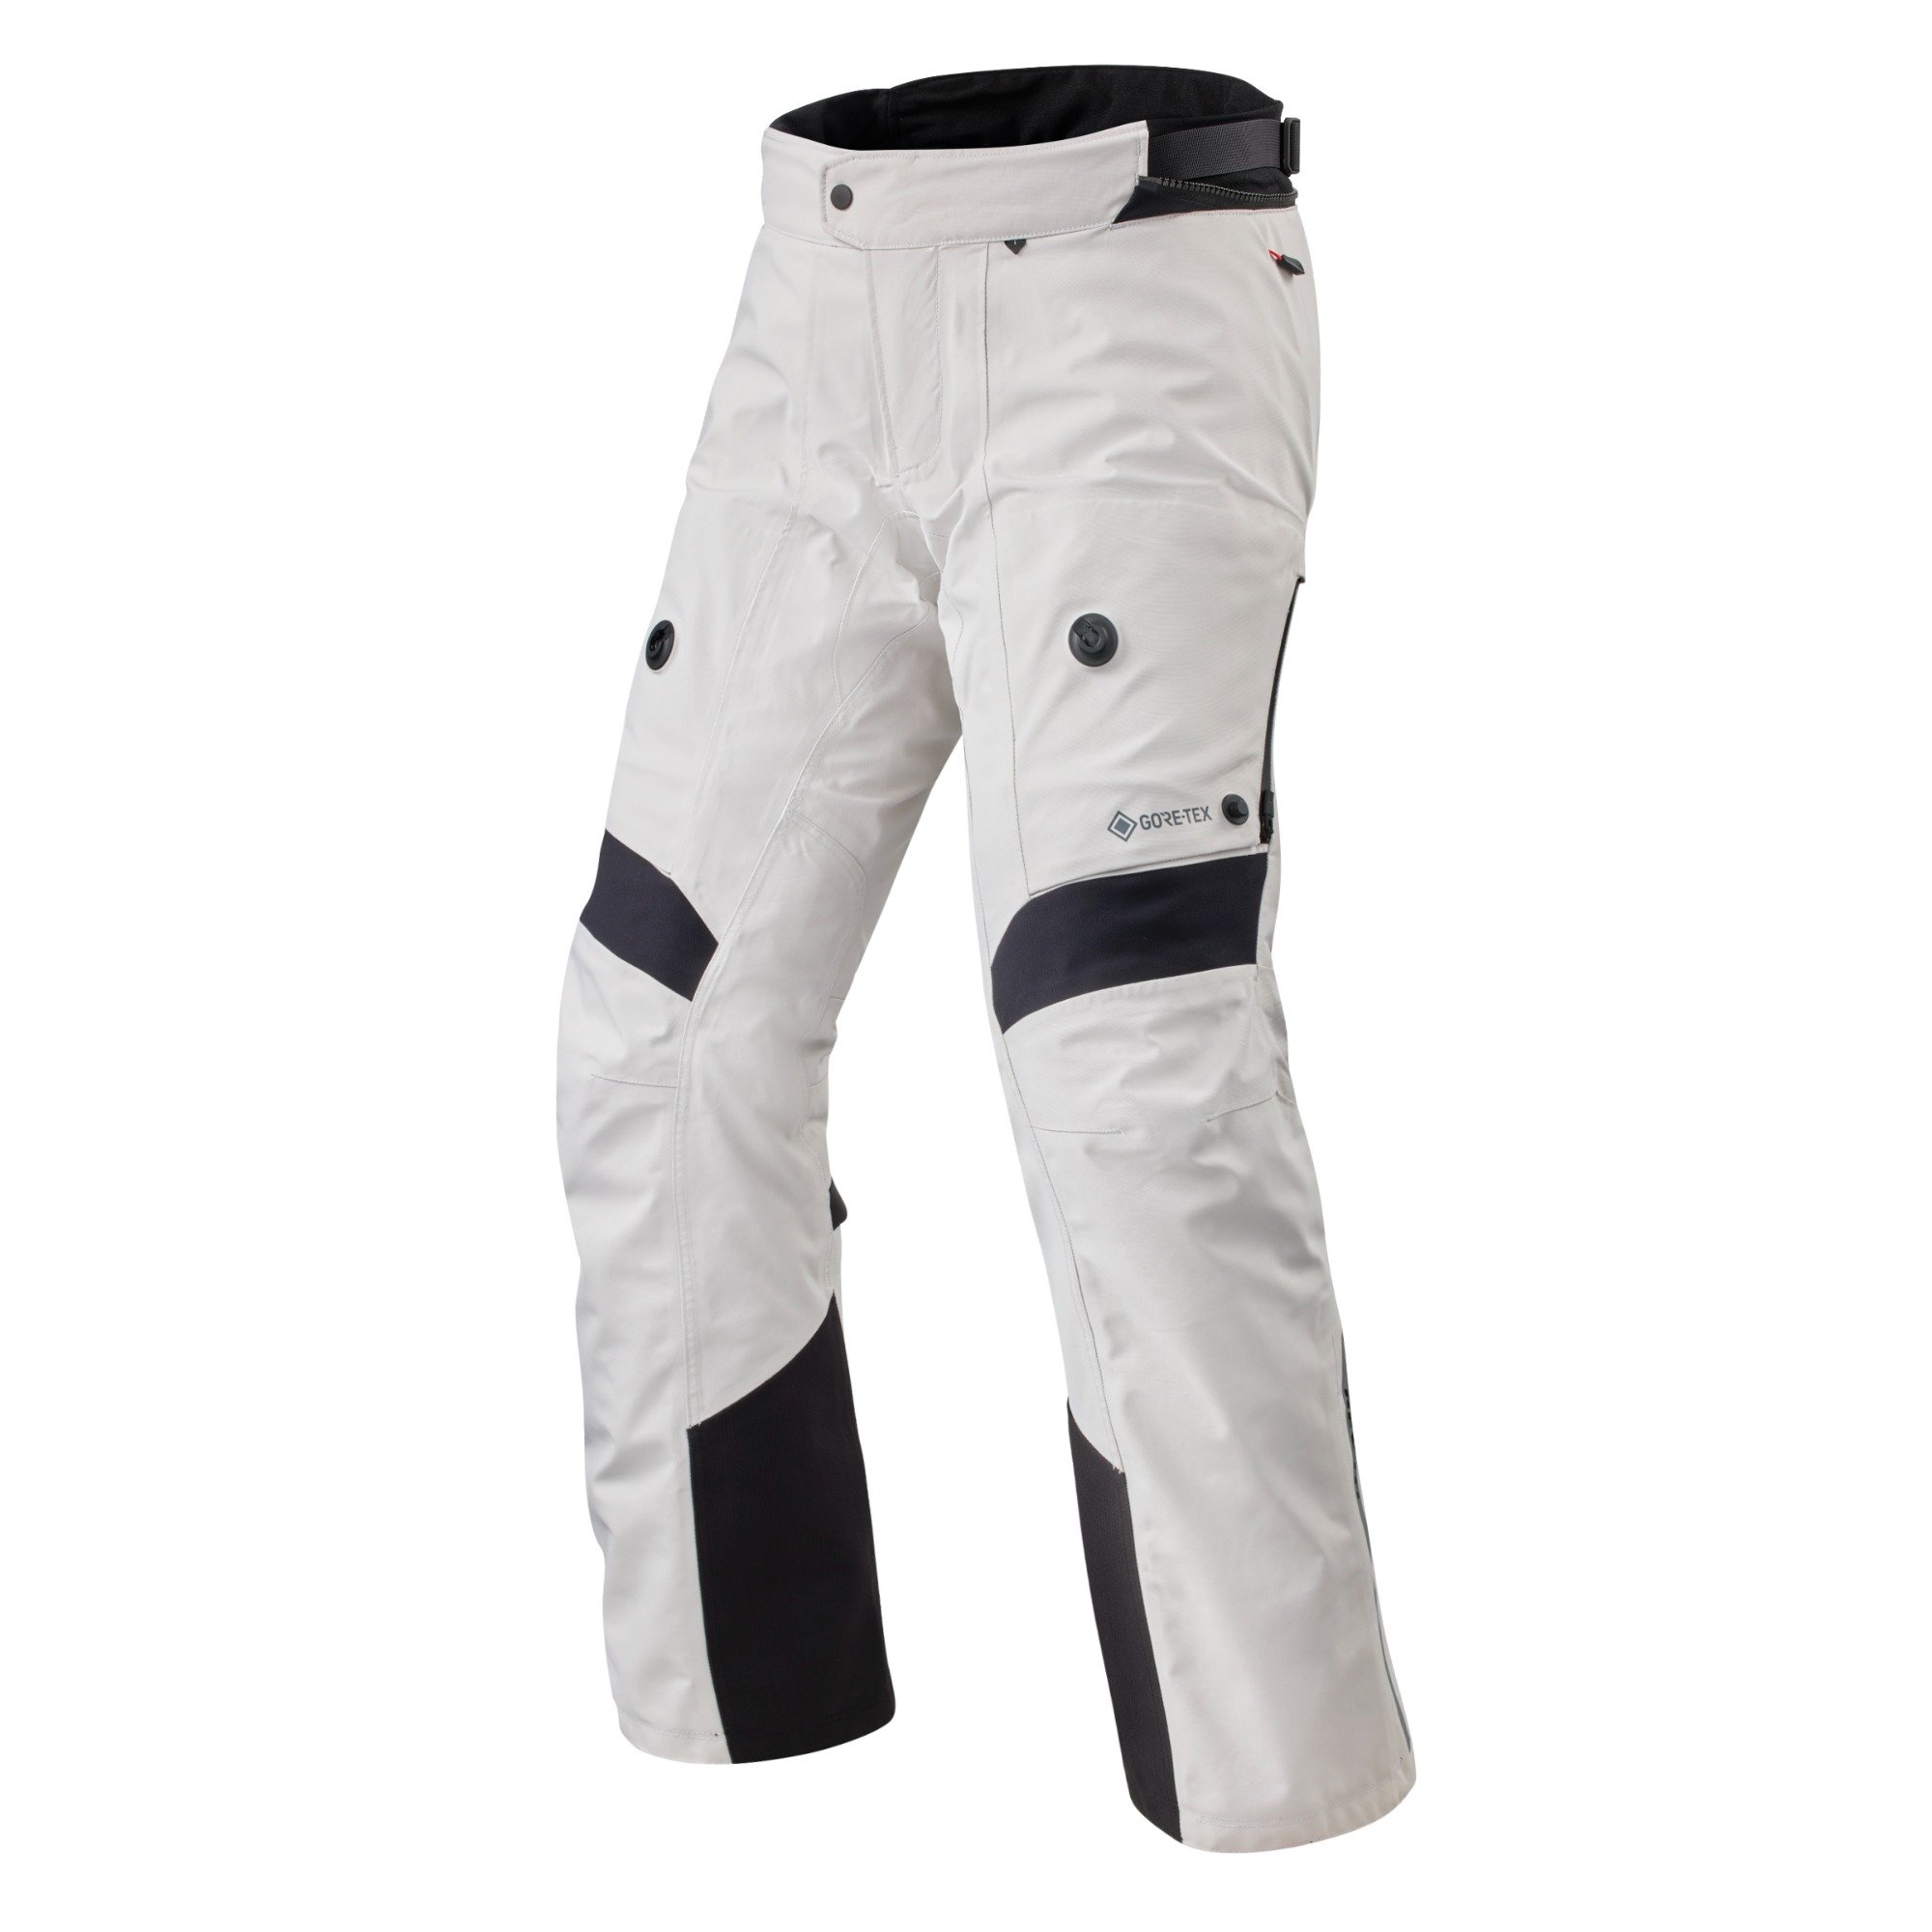 Image of REV'IT! Pants Poseidon 3 GTX Silver Black Long Motorcycle Pants Size 2XL ID 8700001362719